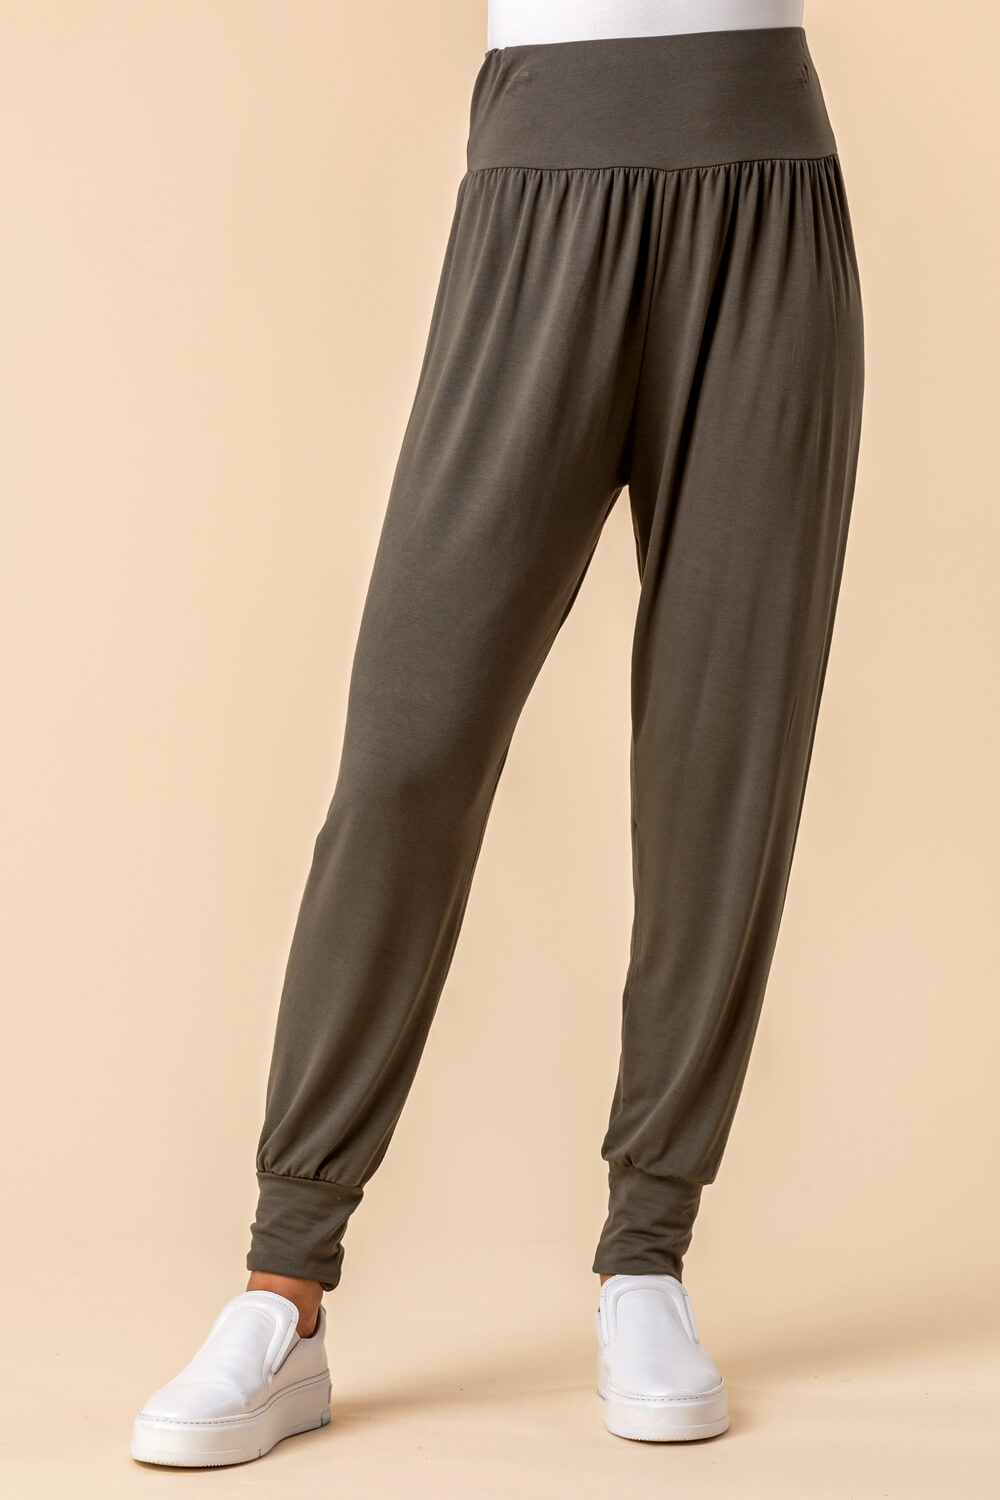 Amazon.com: COOFANDY Men's Linen Harem Pants Lightweight Baggy Capri Pants  Casual Yoga Beach Pants with Pockets Khaki : Clothing, Shoes & Jewelry